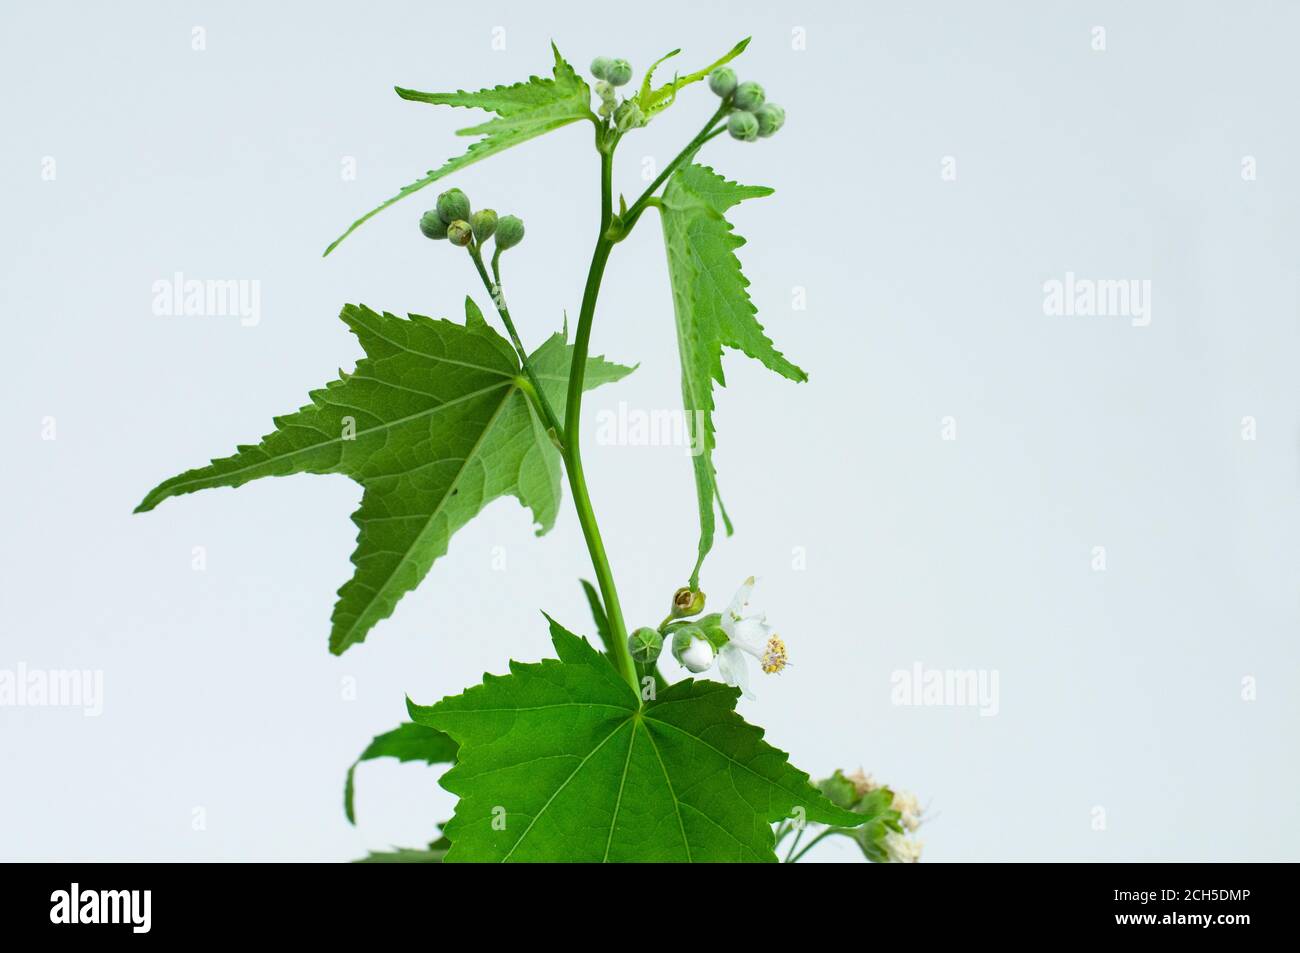 a flowering plant of a fan leaf mallow or sida hermaphrodita Stock Photo